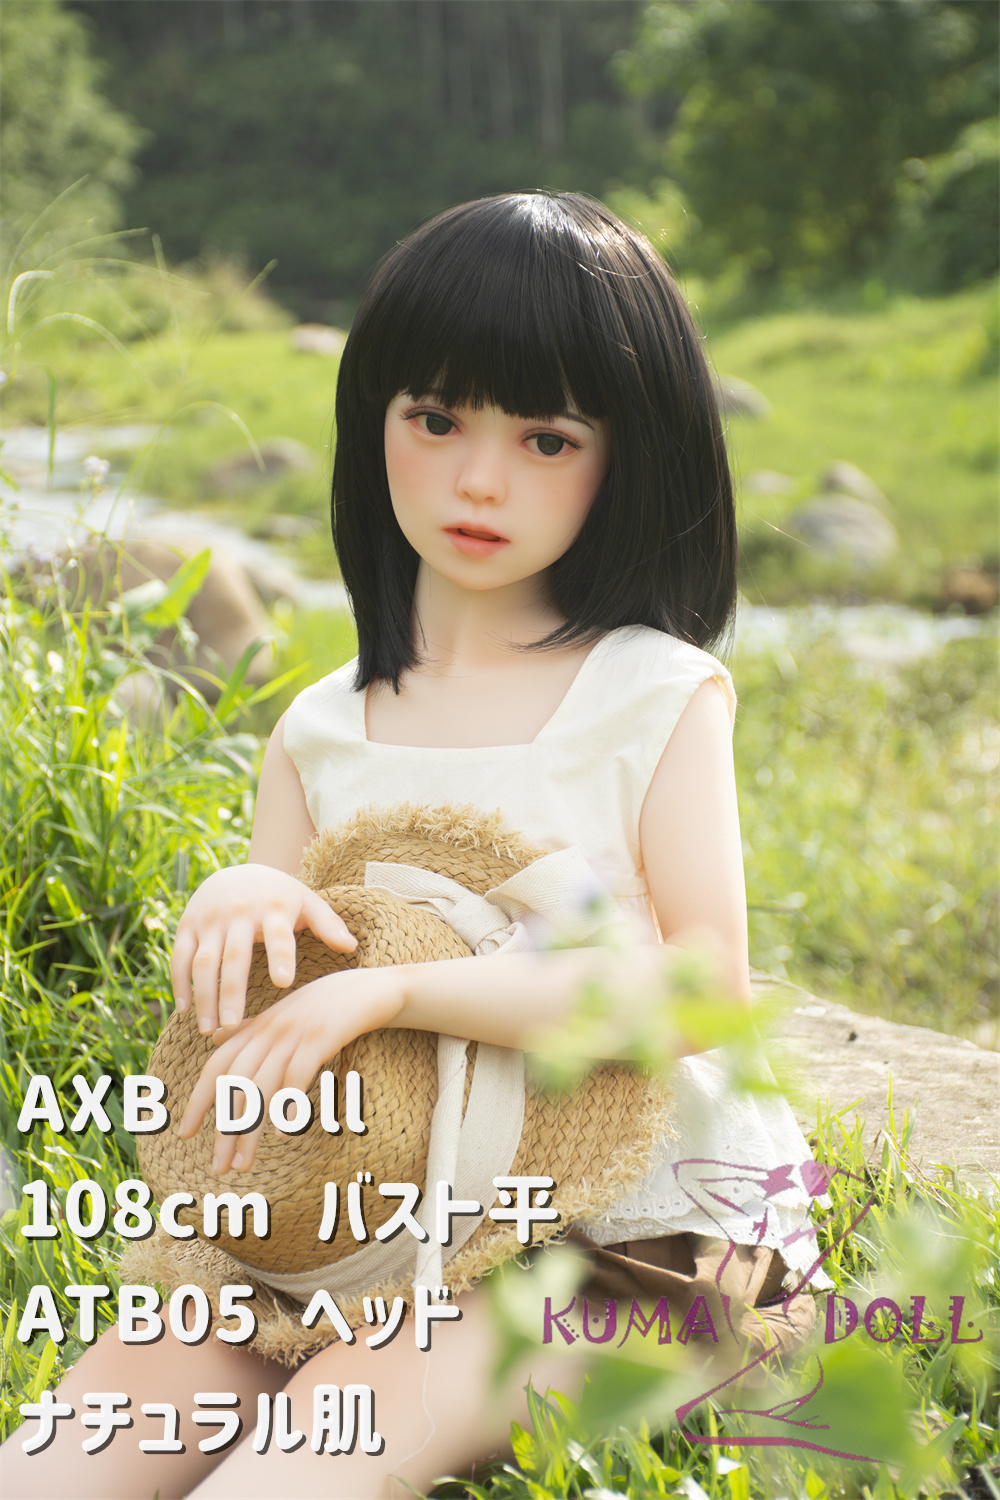 TPE製 AXB Doll 108cm バスト平 ATB05 TPEヘッド 掲載画像のボディはリアルメイク付き